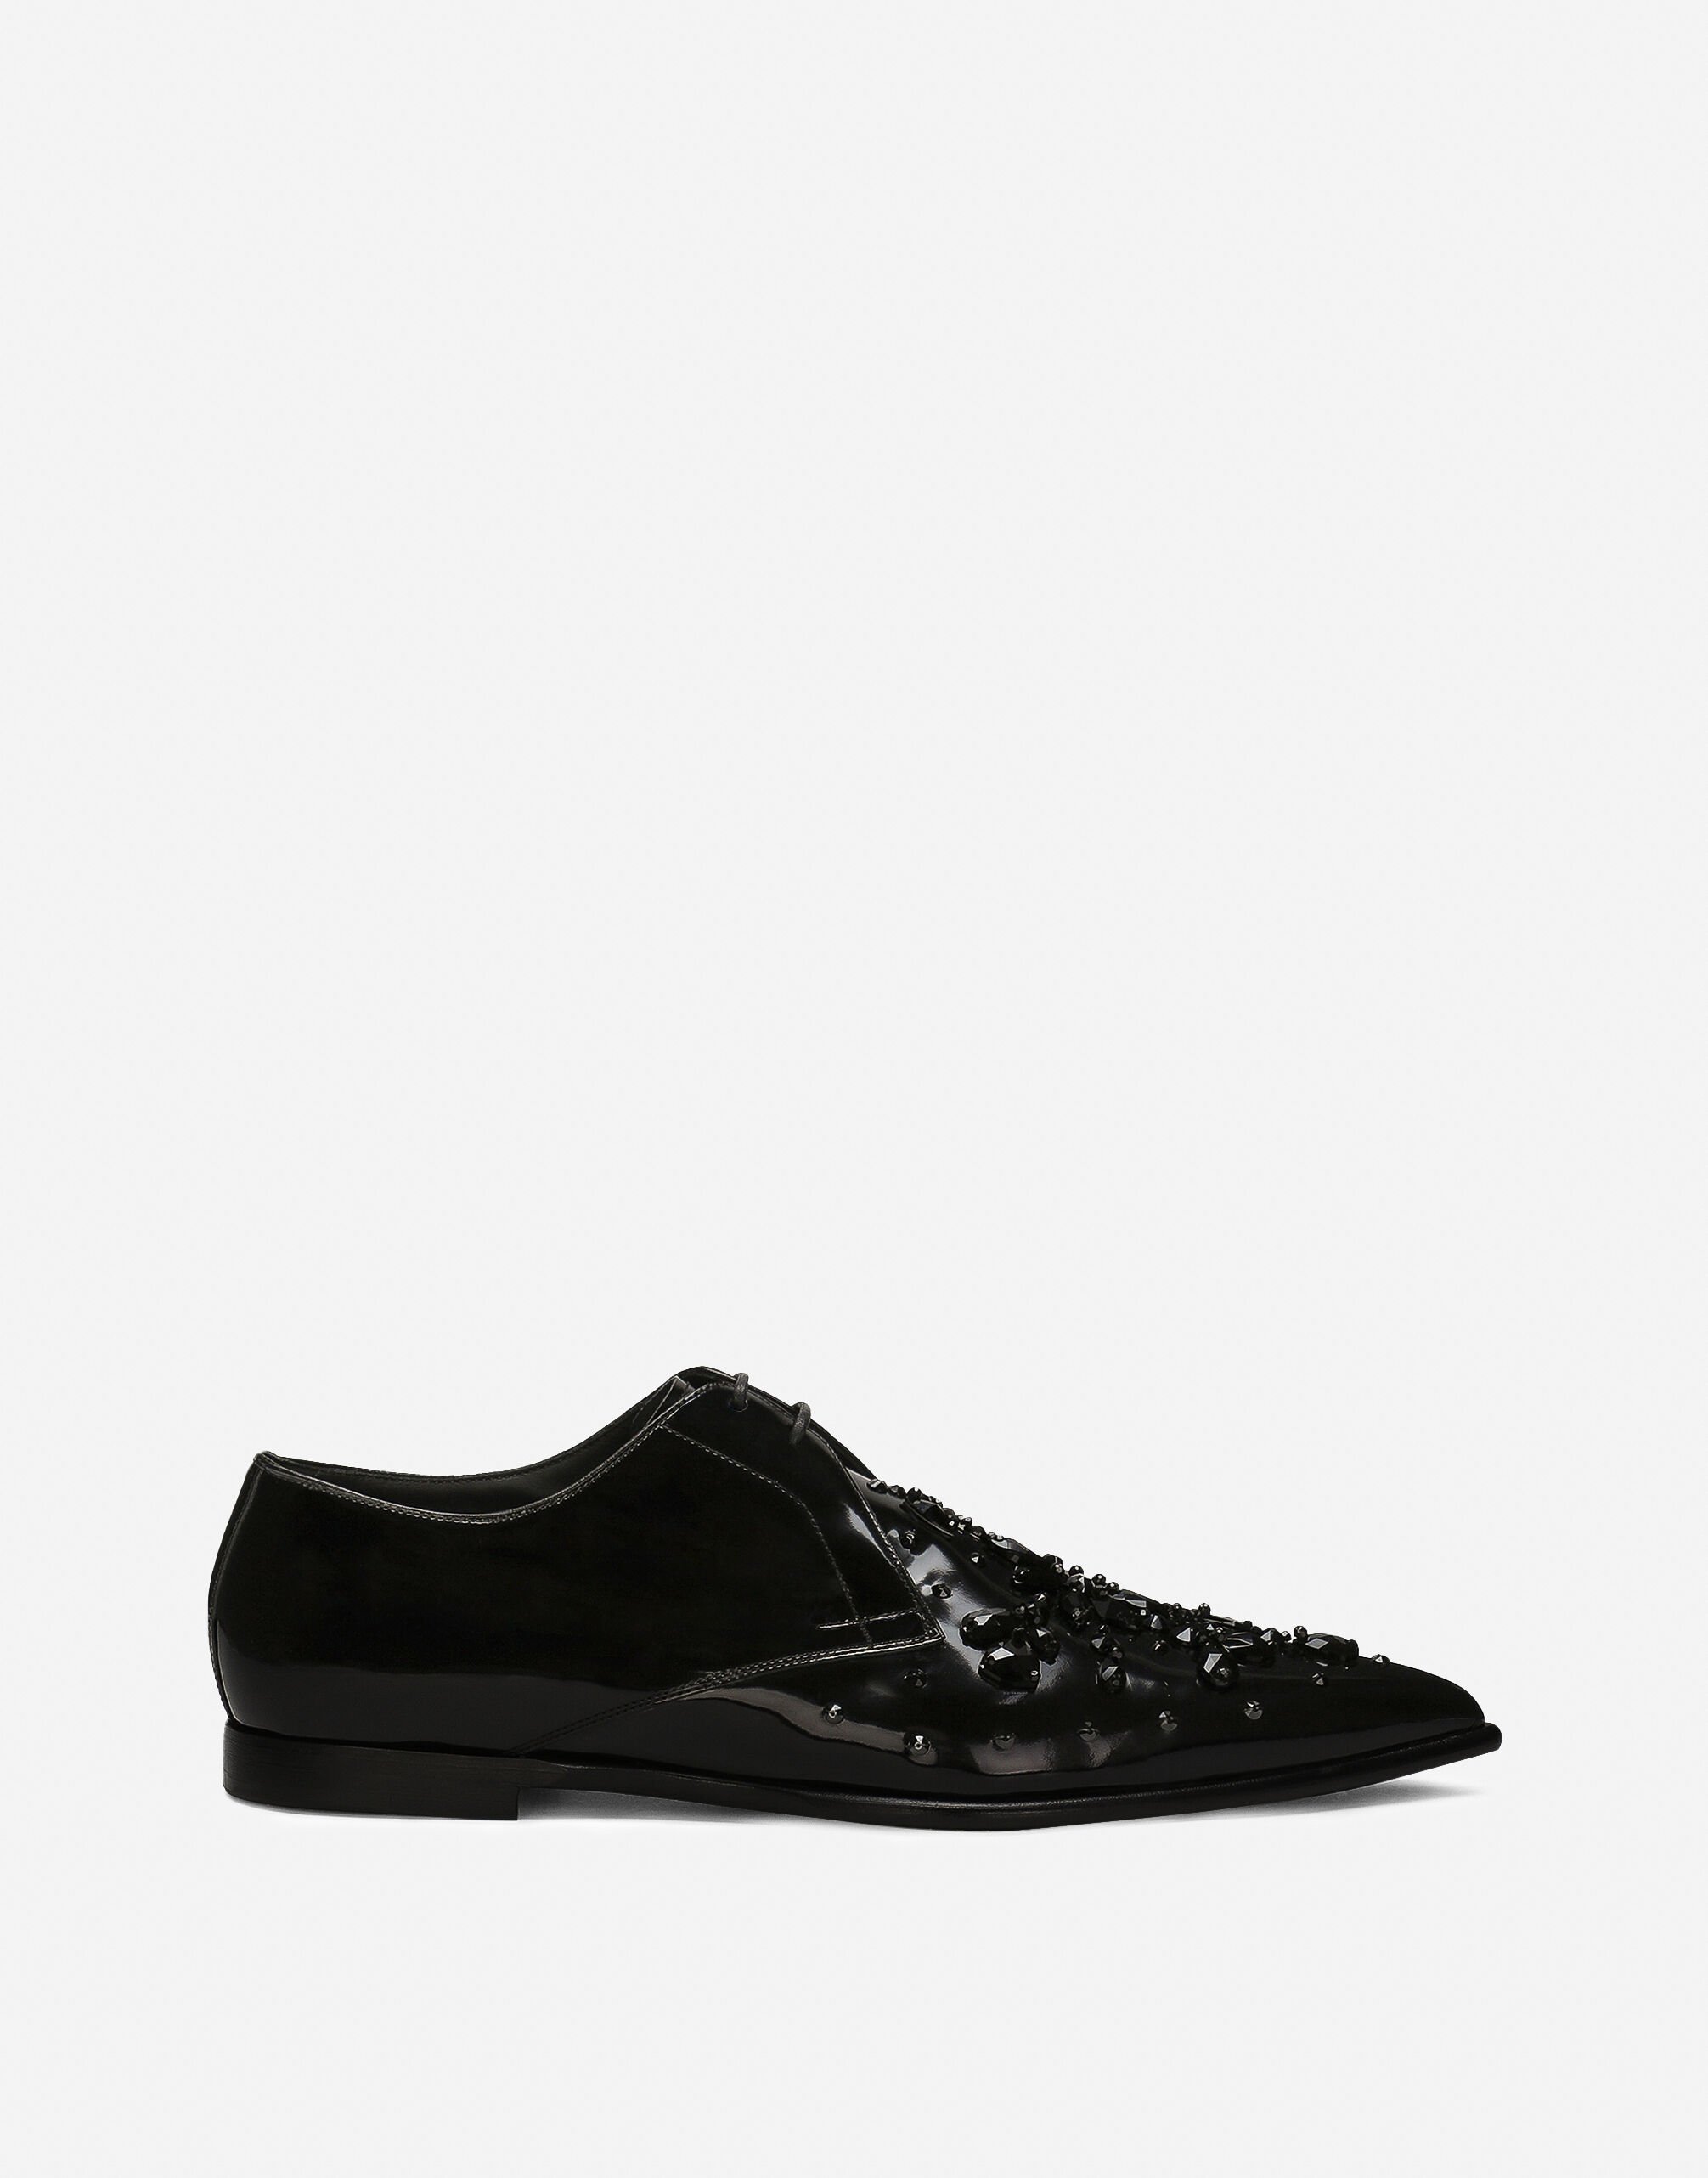 Dolce & Gabbana 小牛皮德比鞋 黑 A20170A1203